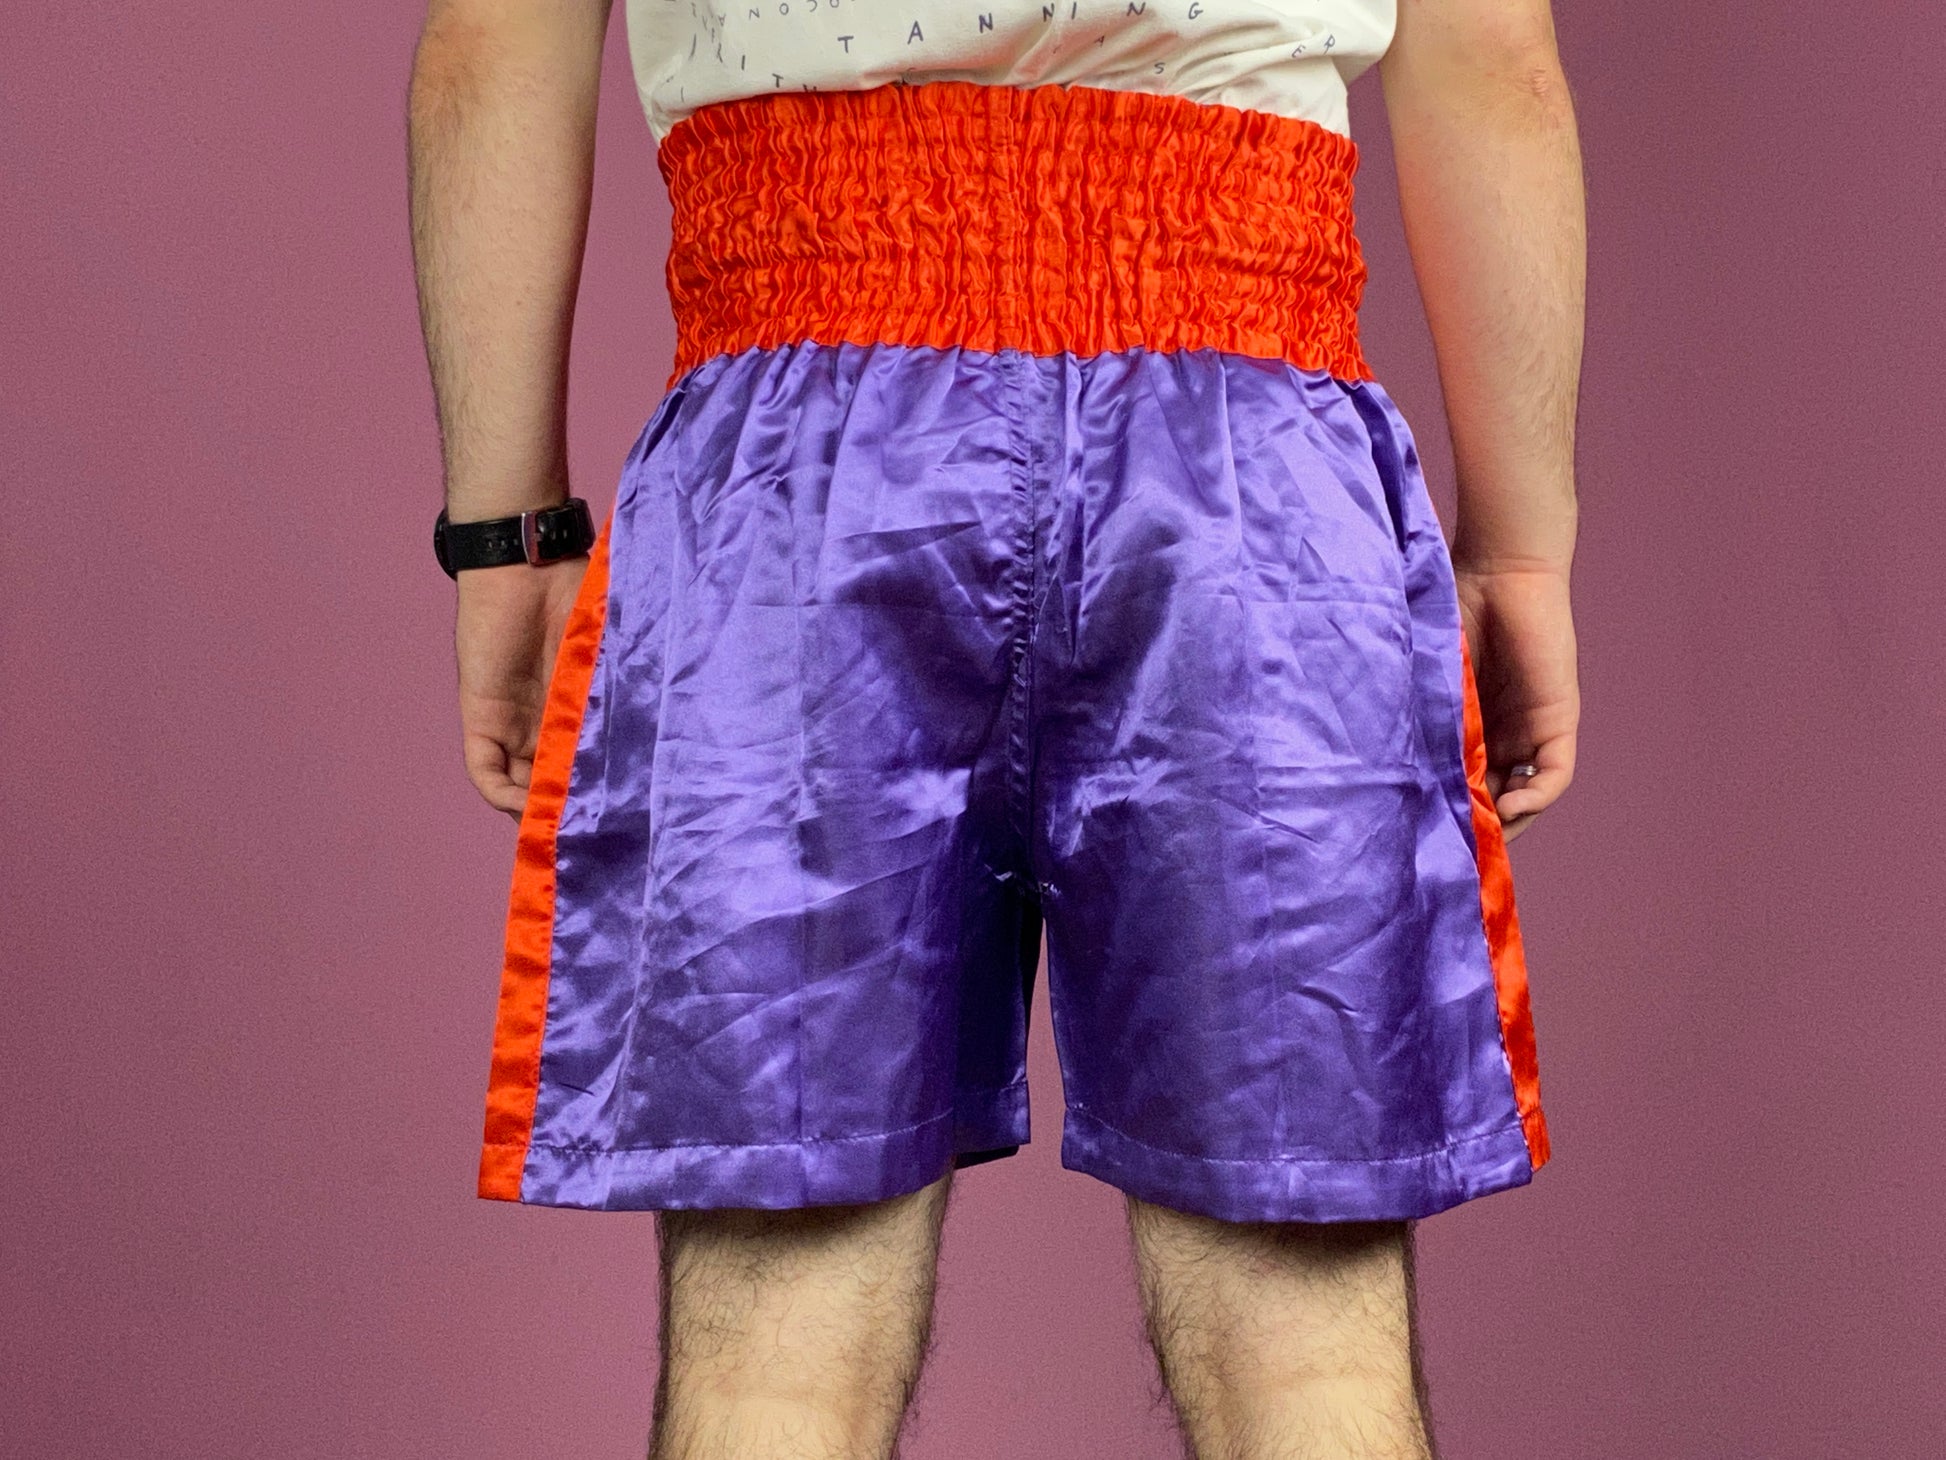 90s Vintage Men's Muay Thai Shorts - XXL Purple & Red Cotton